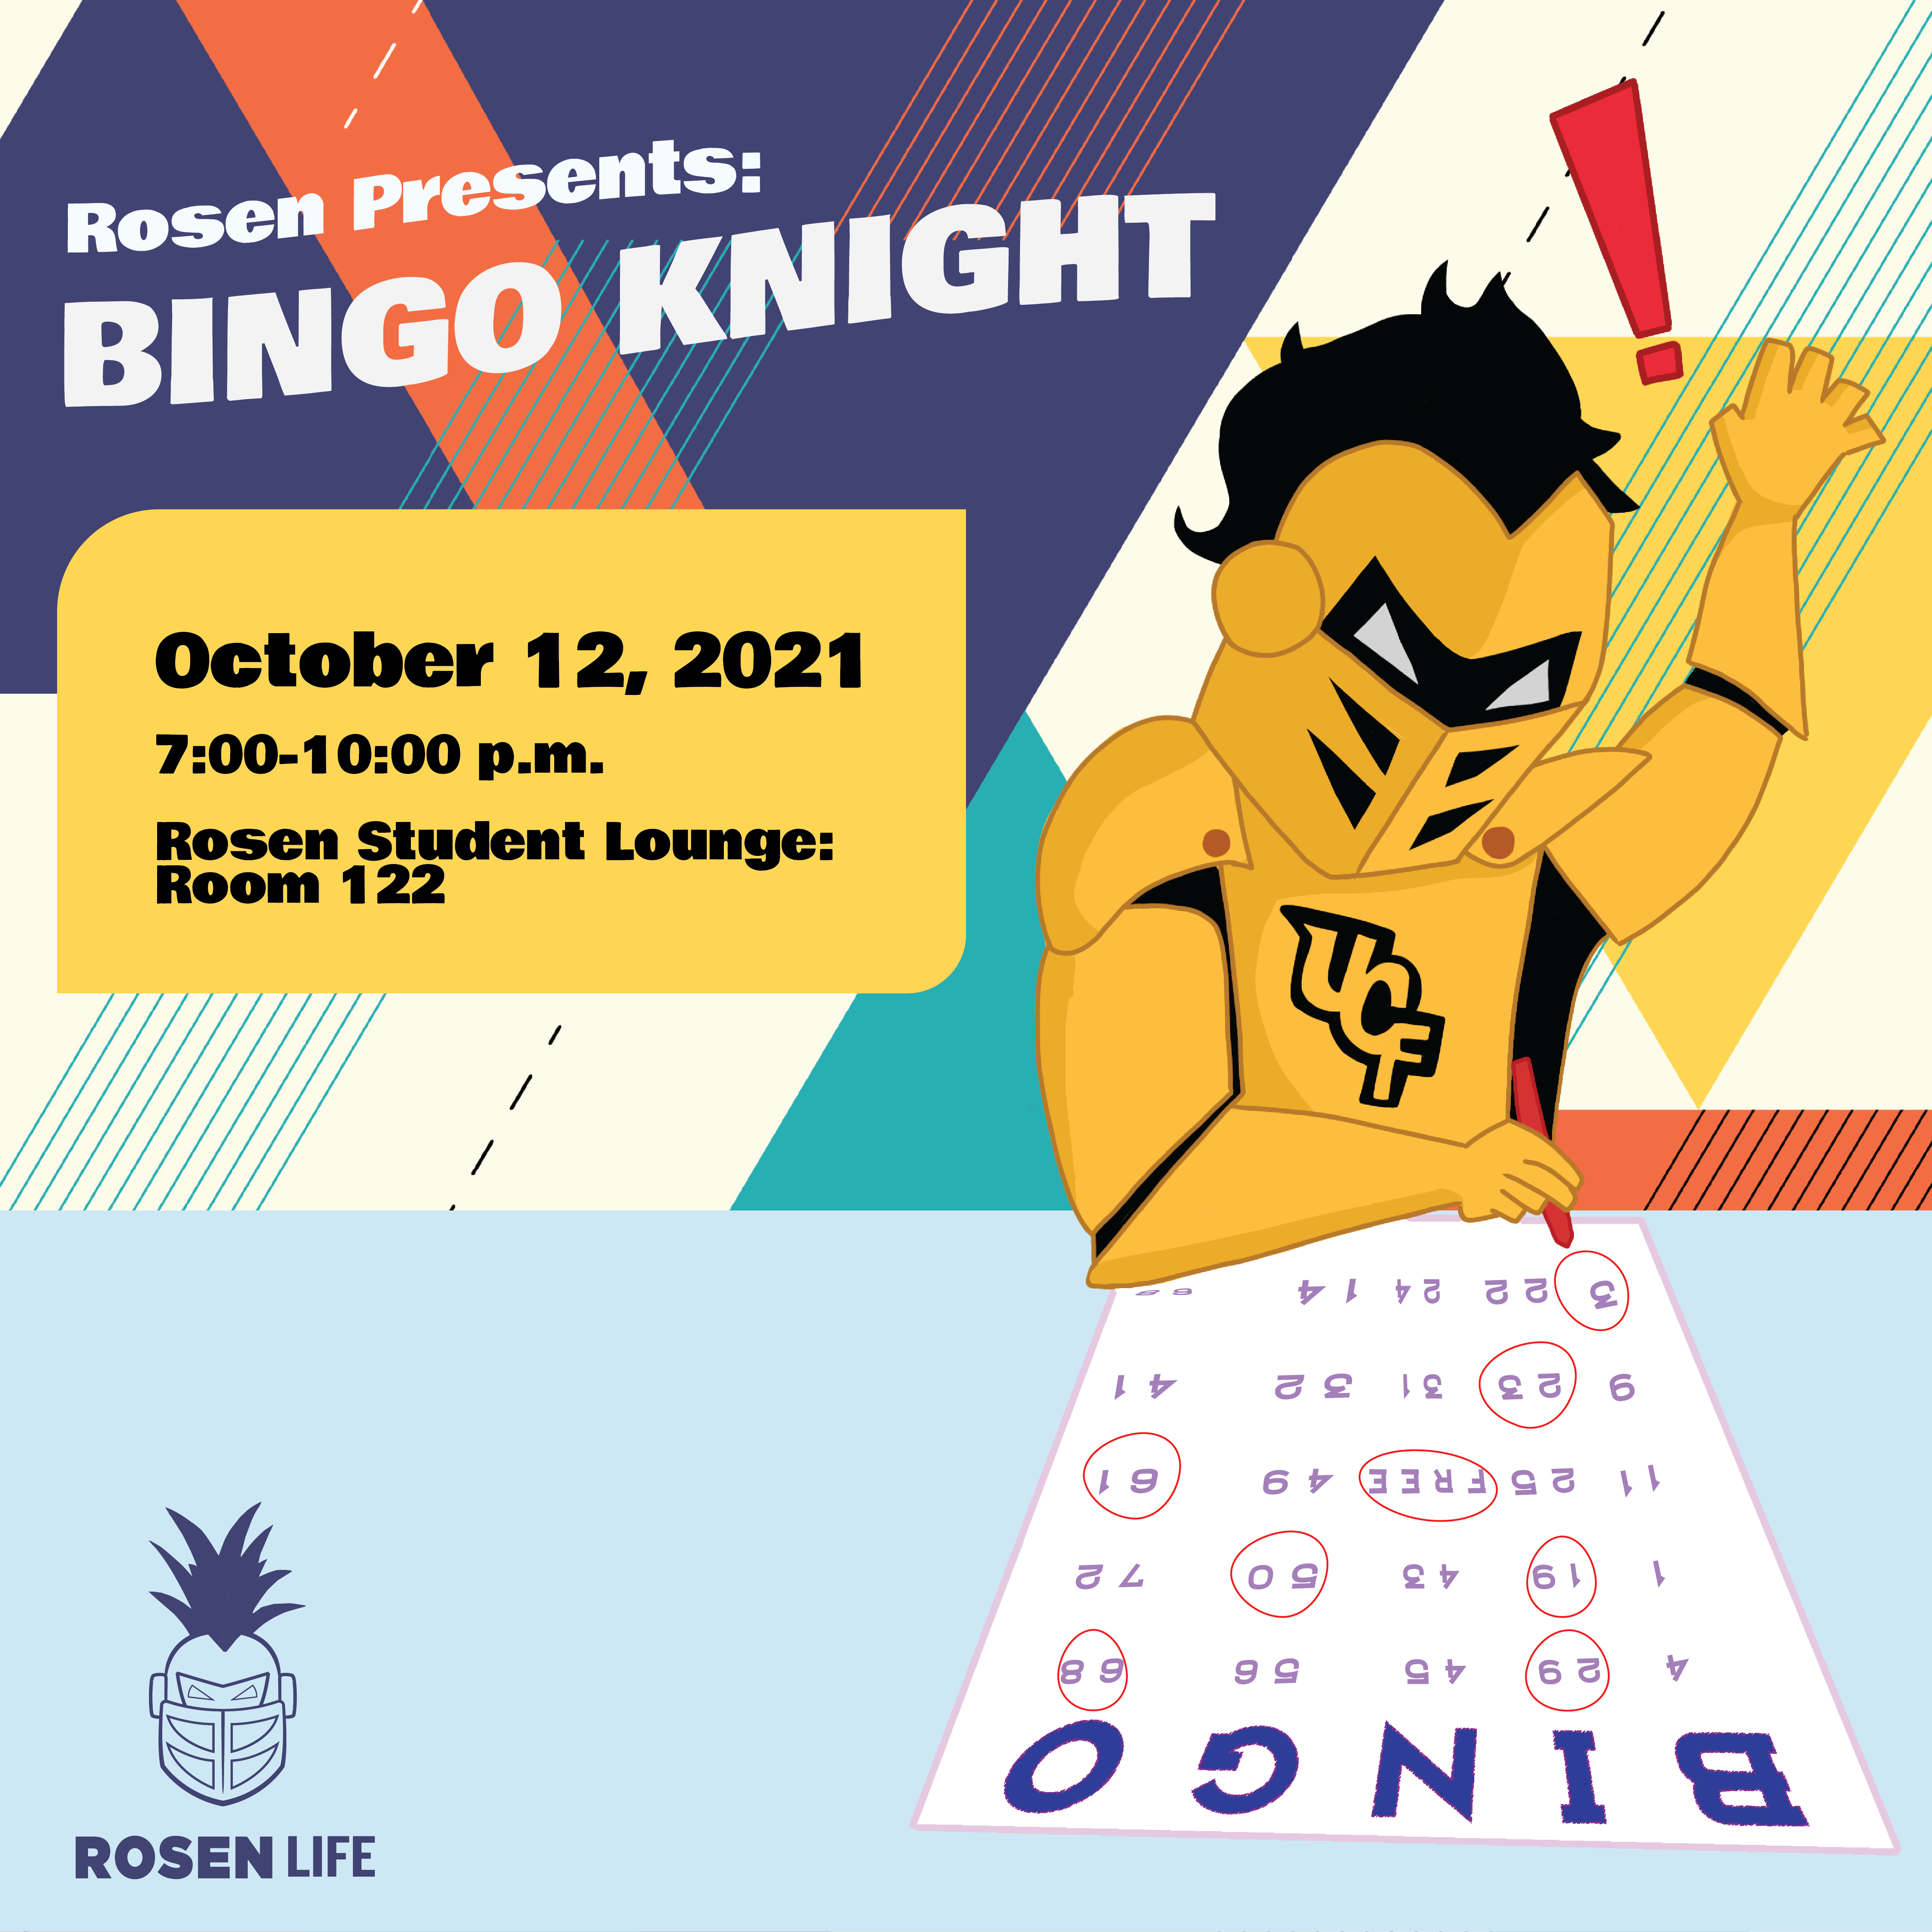 Bingo knight event flyer, Knightro scoring bingo